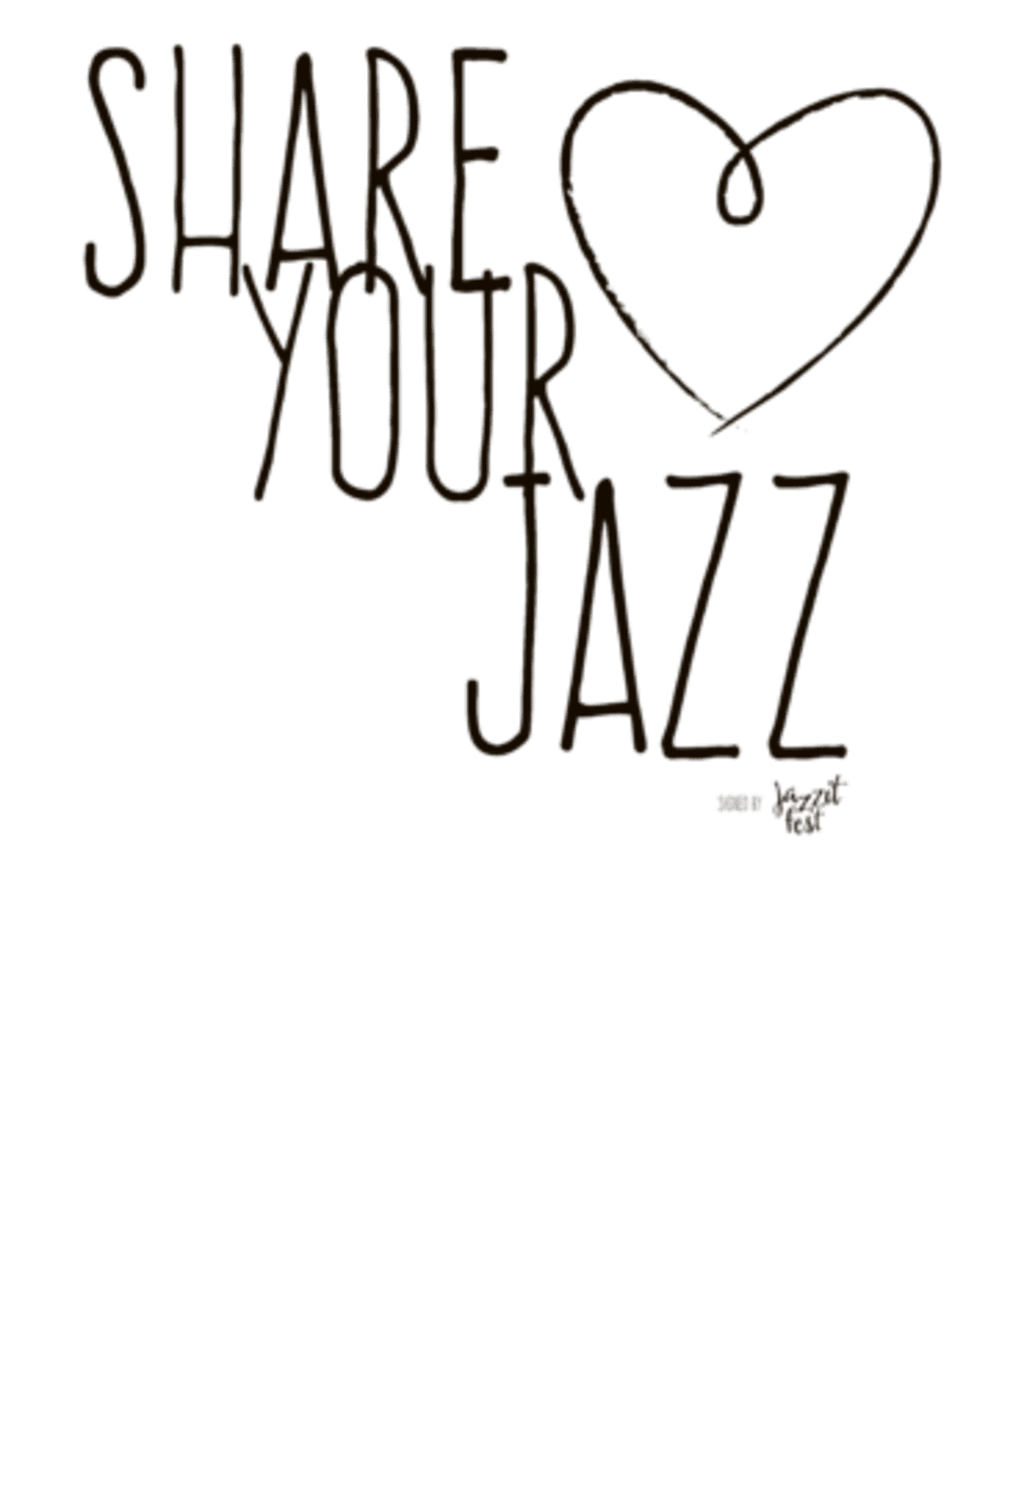 Share your Jazz (bianca)